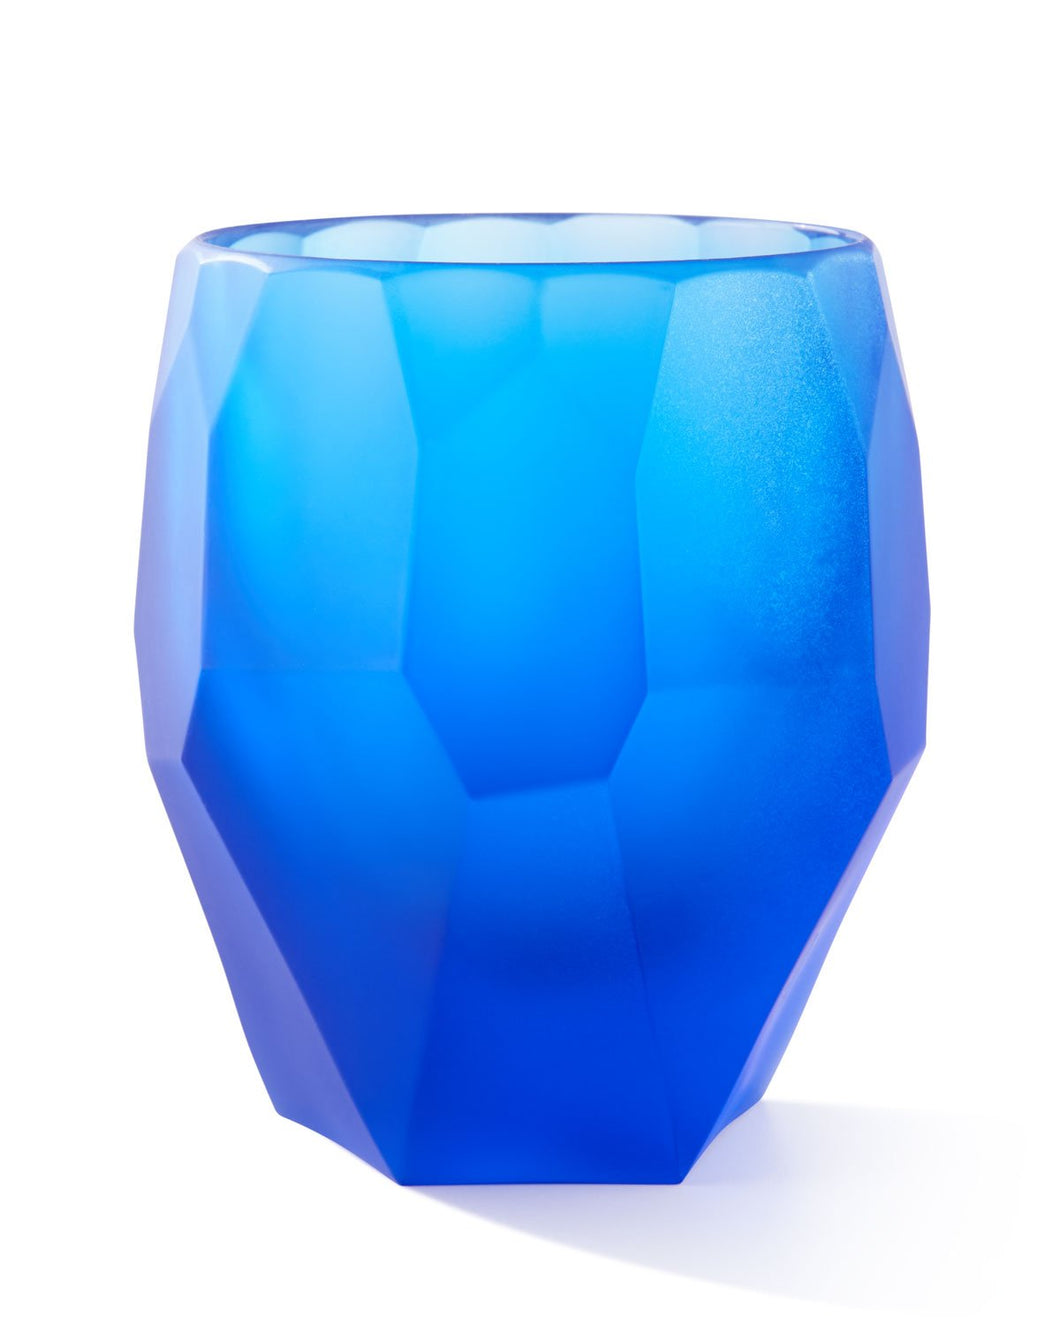 Vaso alto - milly - Azul frost - Shop now